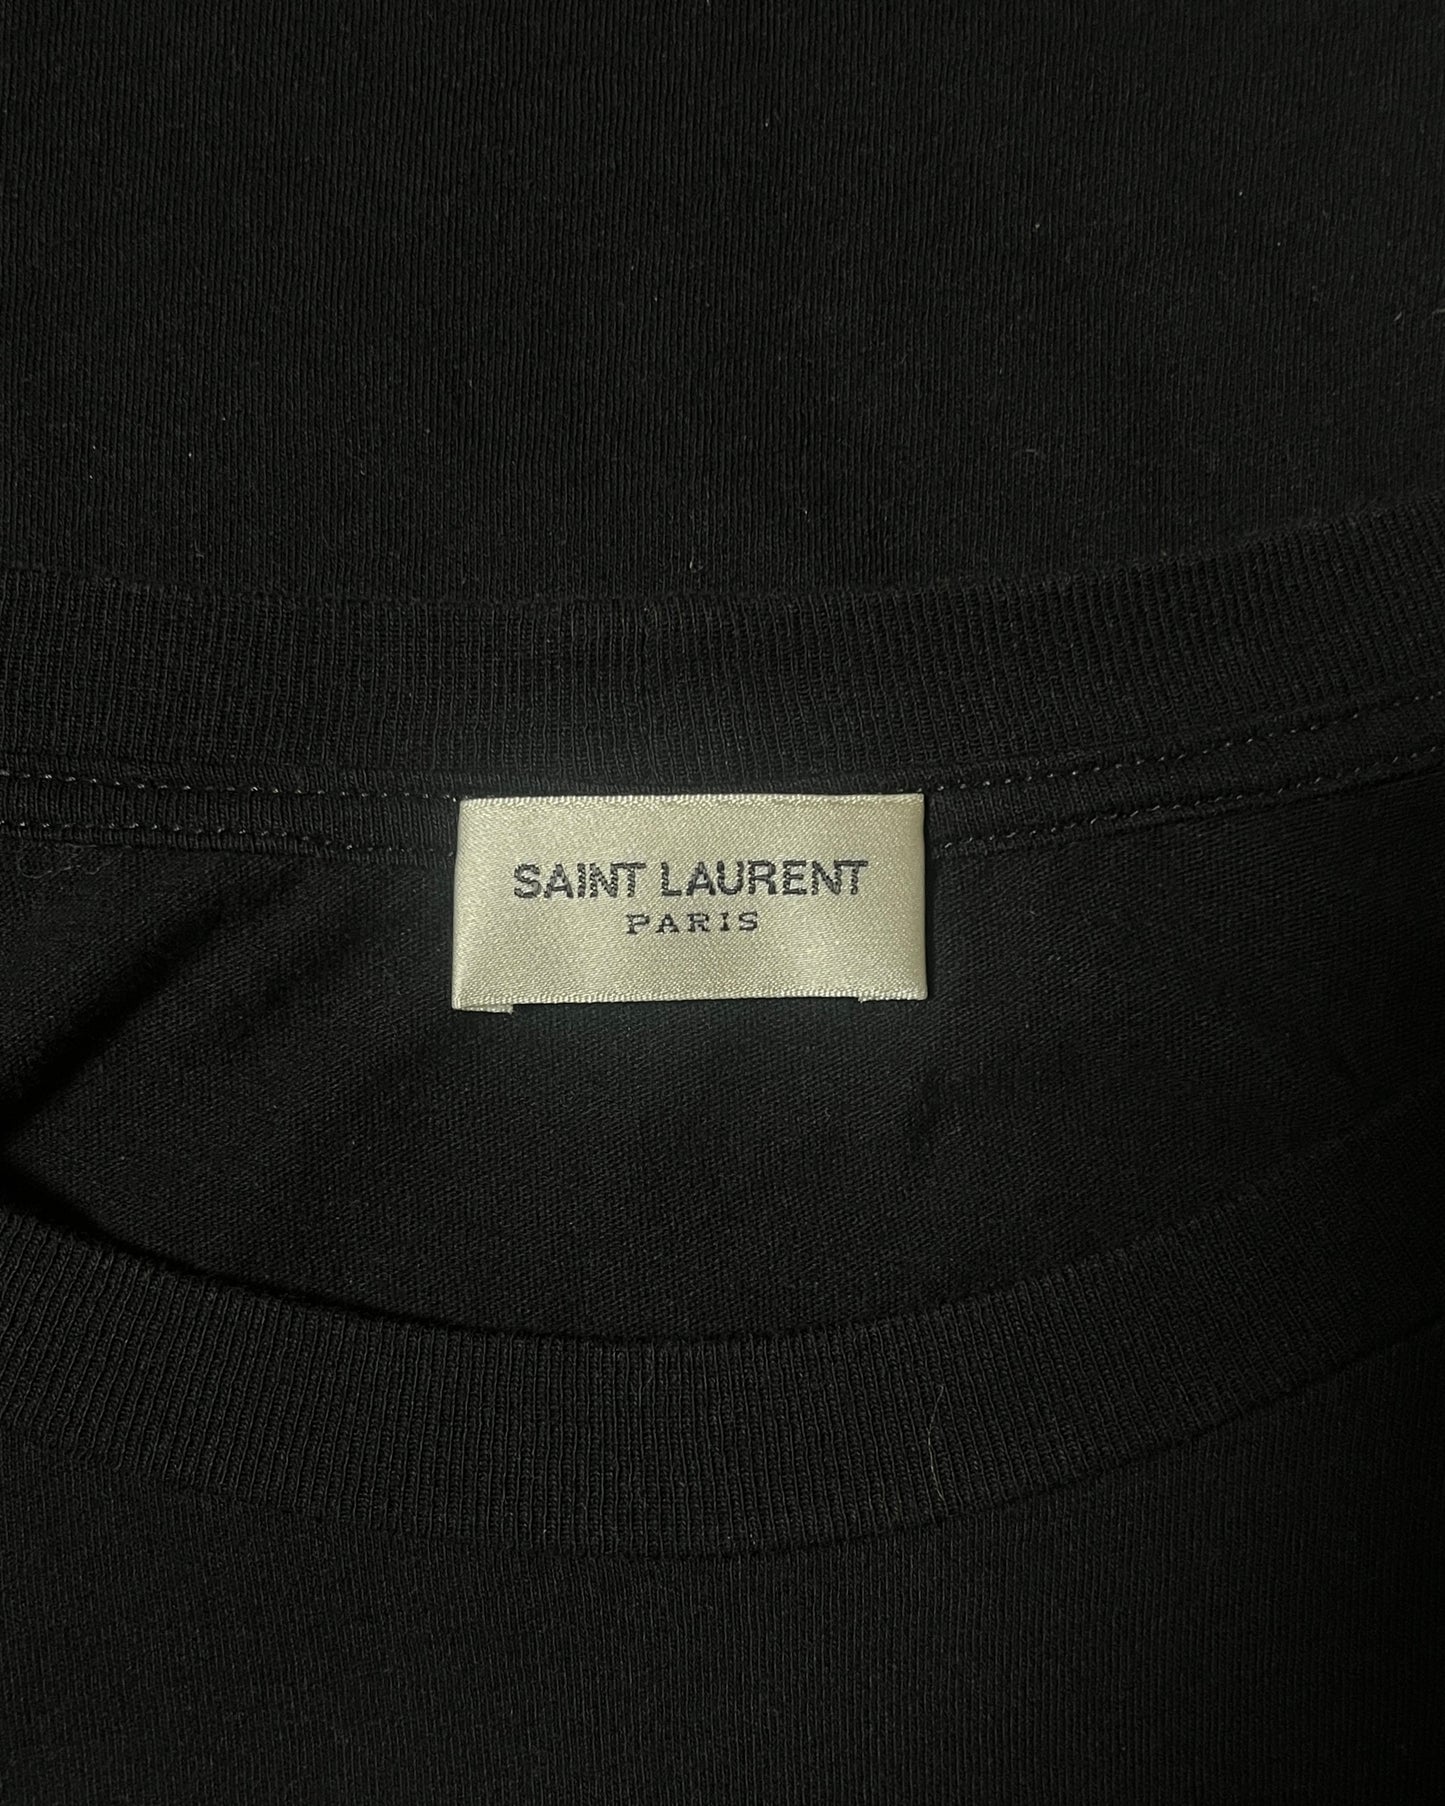 Saint Laurent Paris 'Watch It' Tee